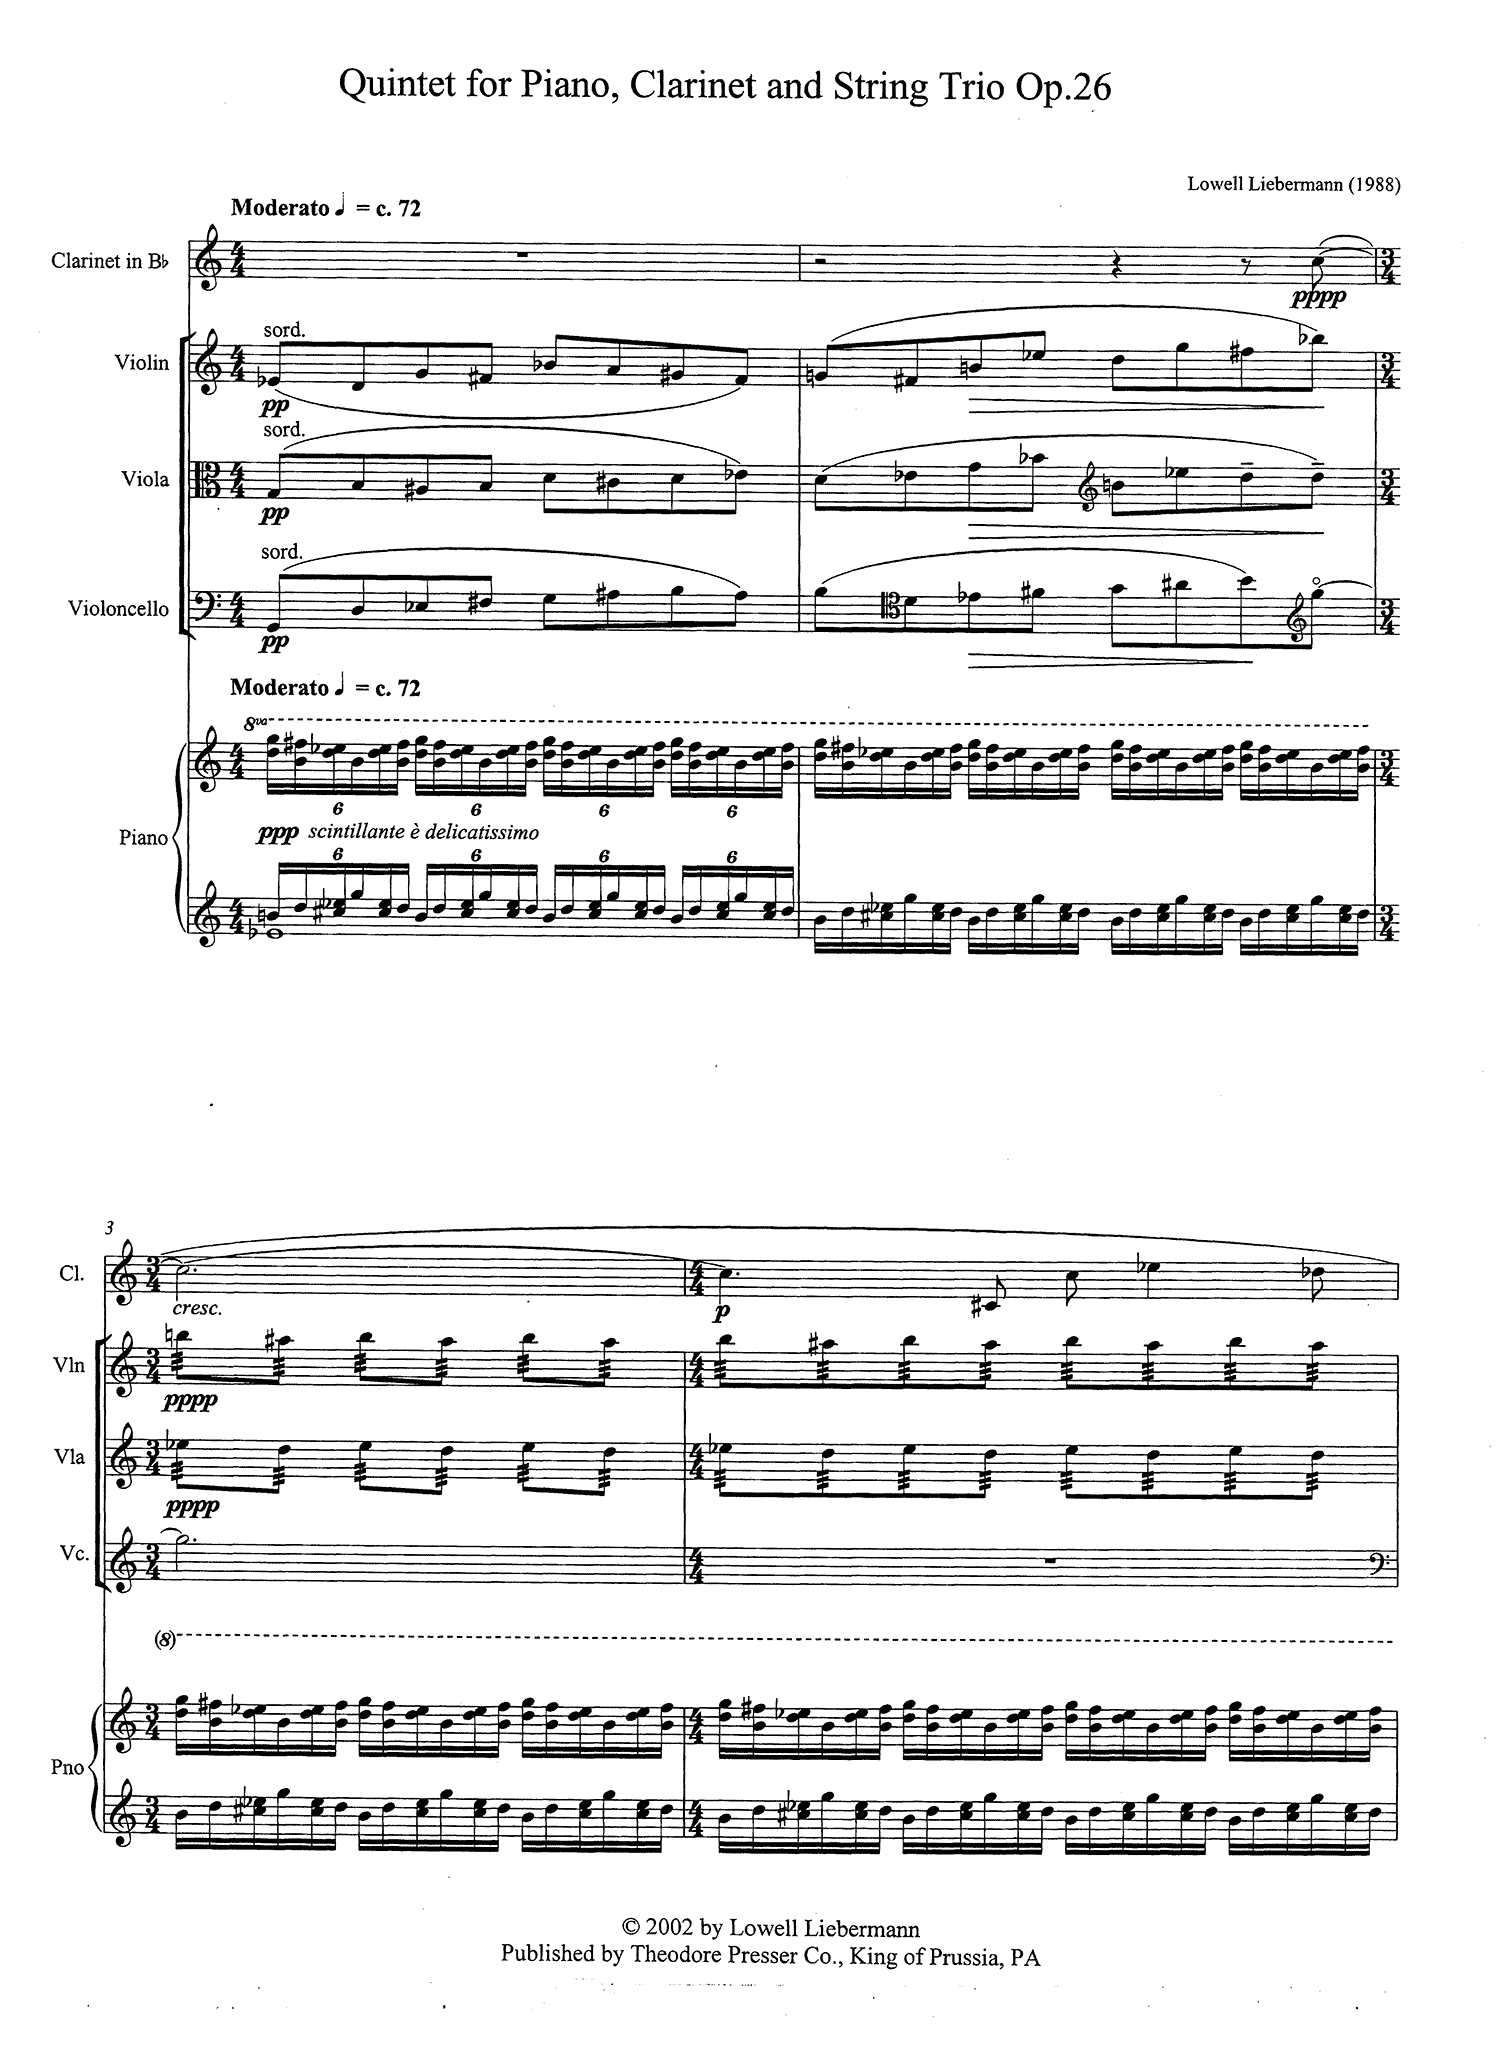 Quintet, Op. 26 - Movement 1